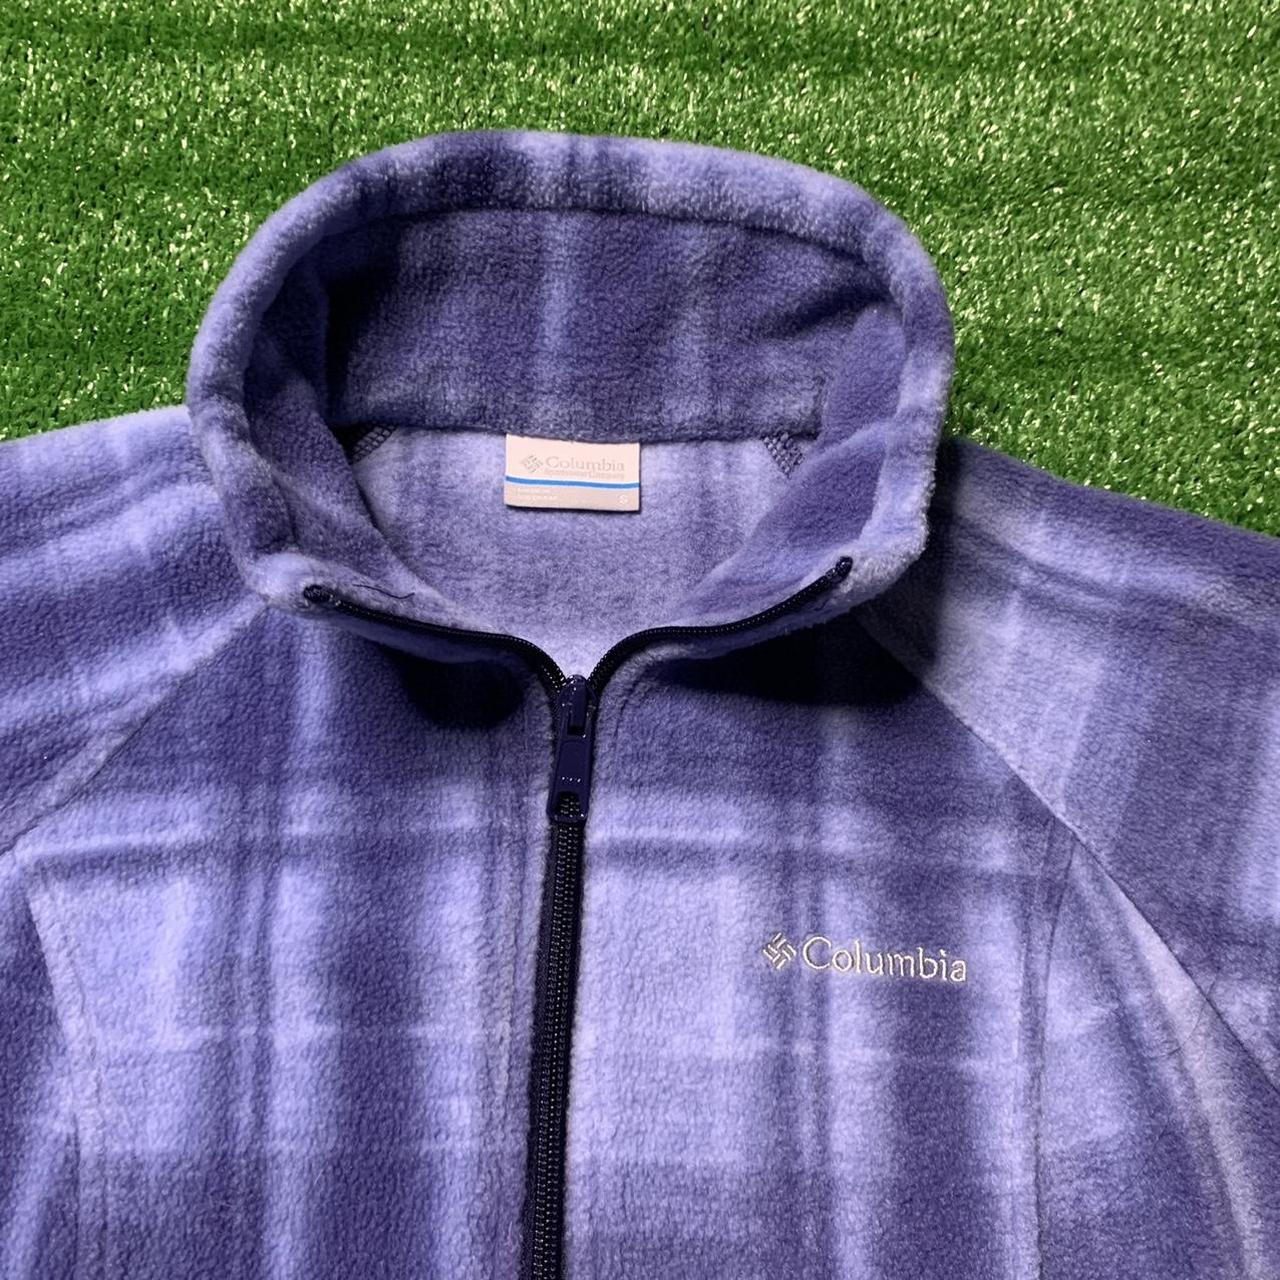 Product Image 2 - Blue Plaid Columbia Fleece Jacket